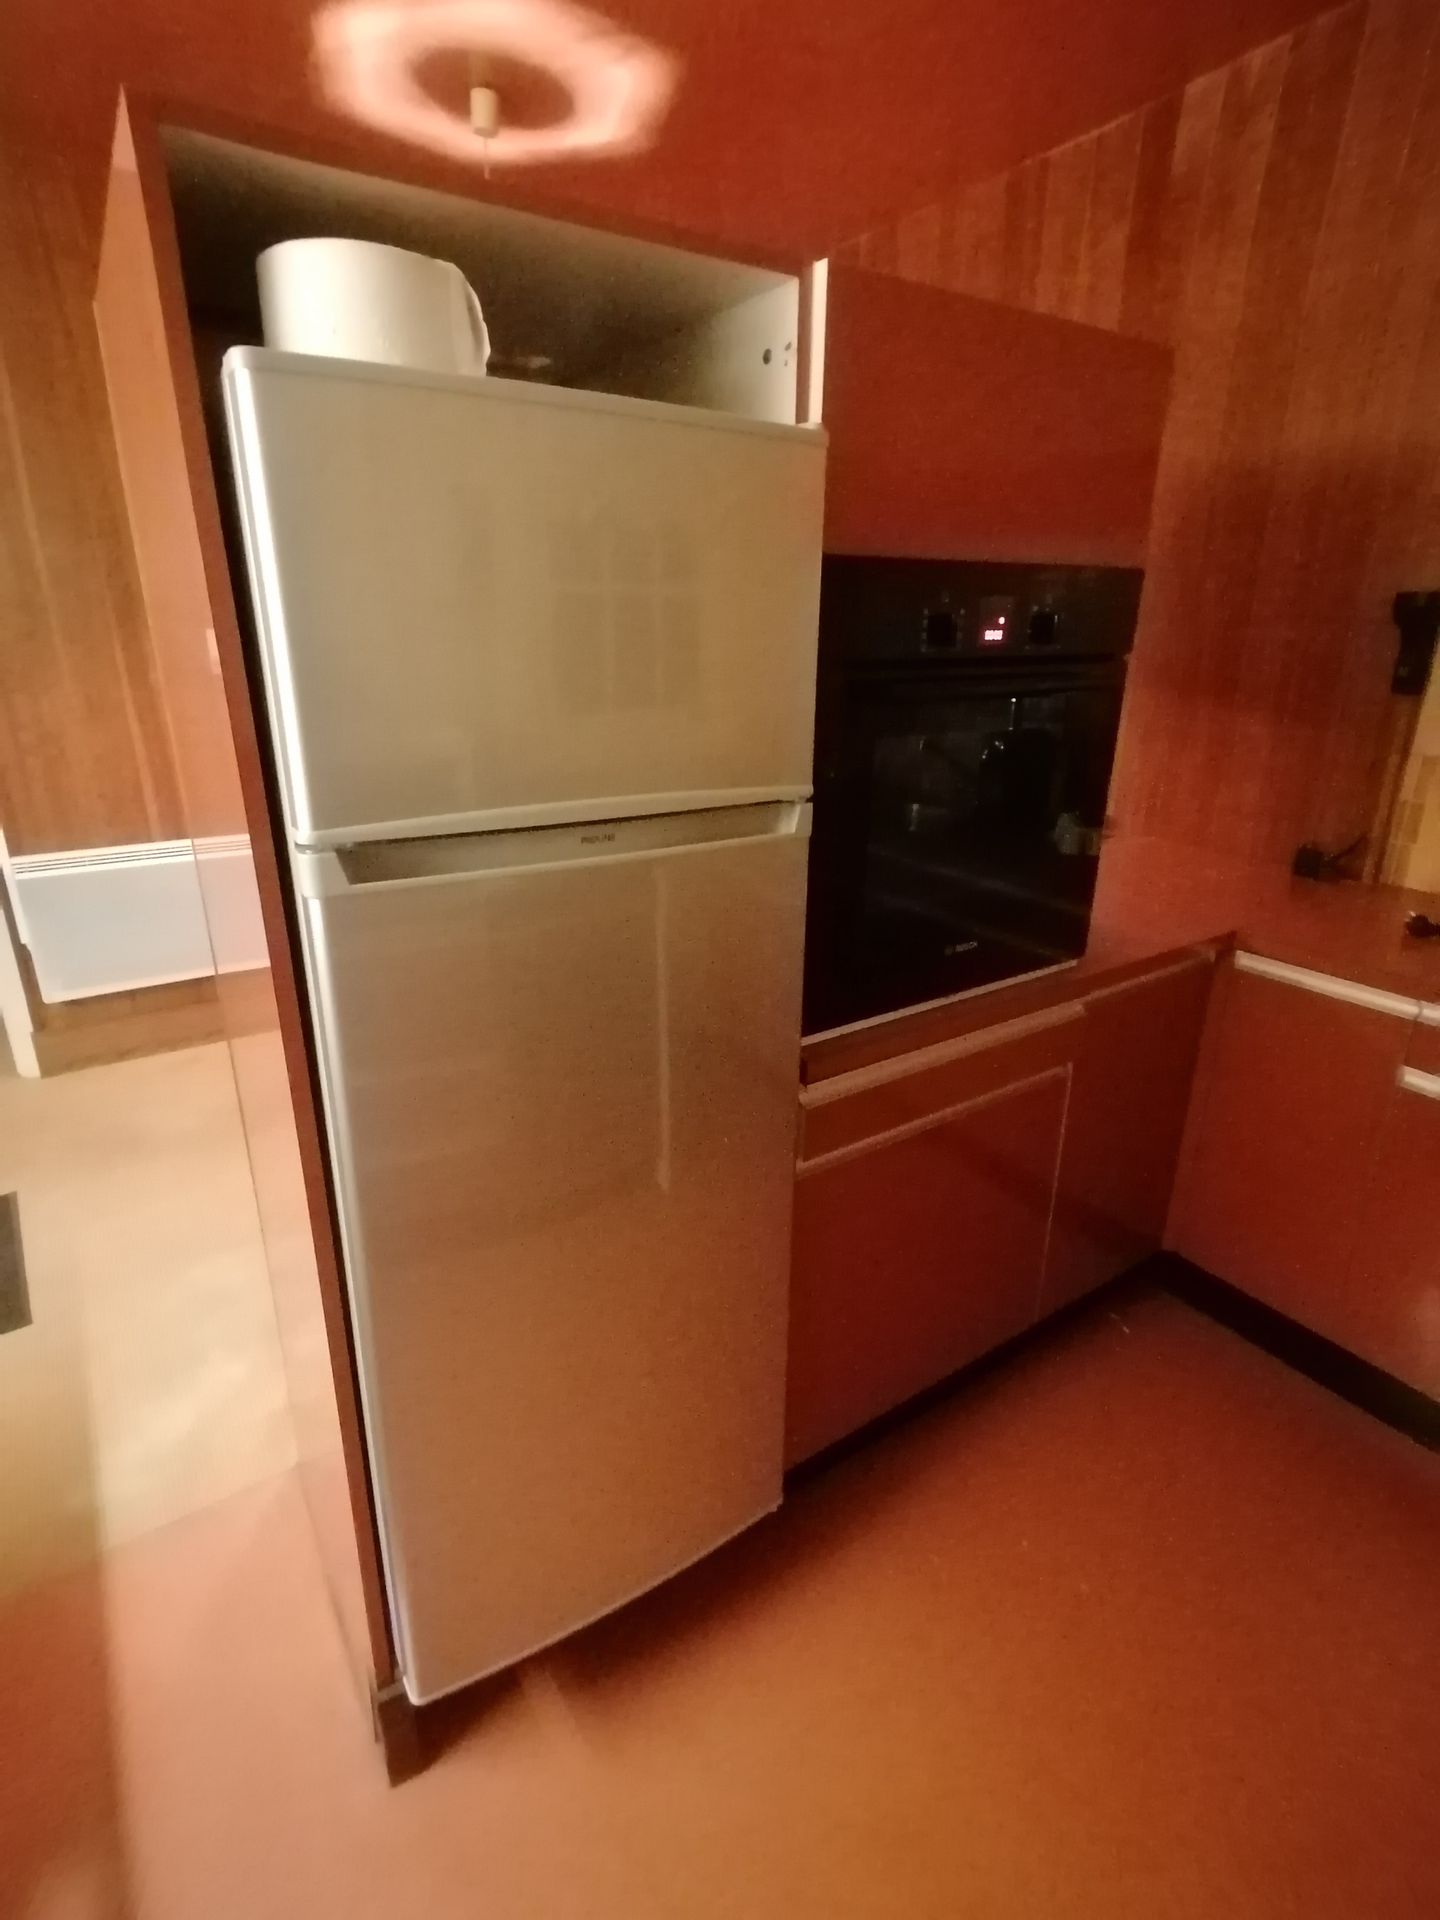 Null 
一套家用电器包括:
- 1台BOSCH烤箱。
- 1个MOULINEX微波炉。
- 1台Proline冰箱
- 1台Vedette洗衣机